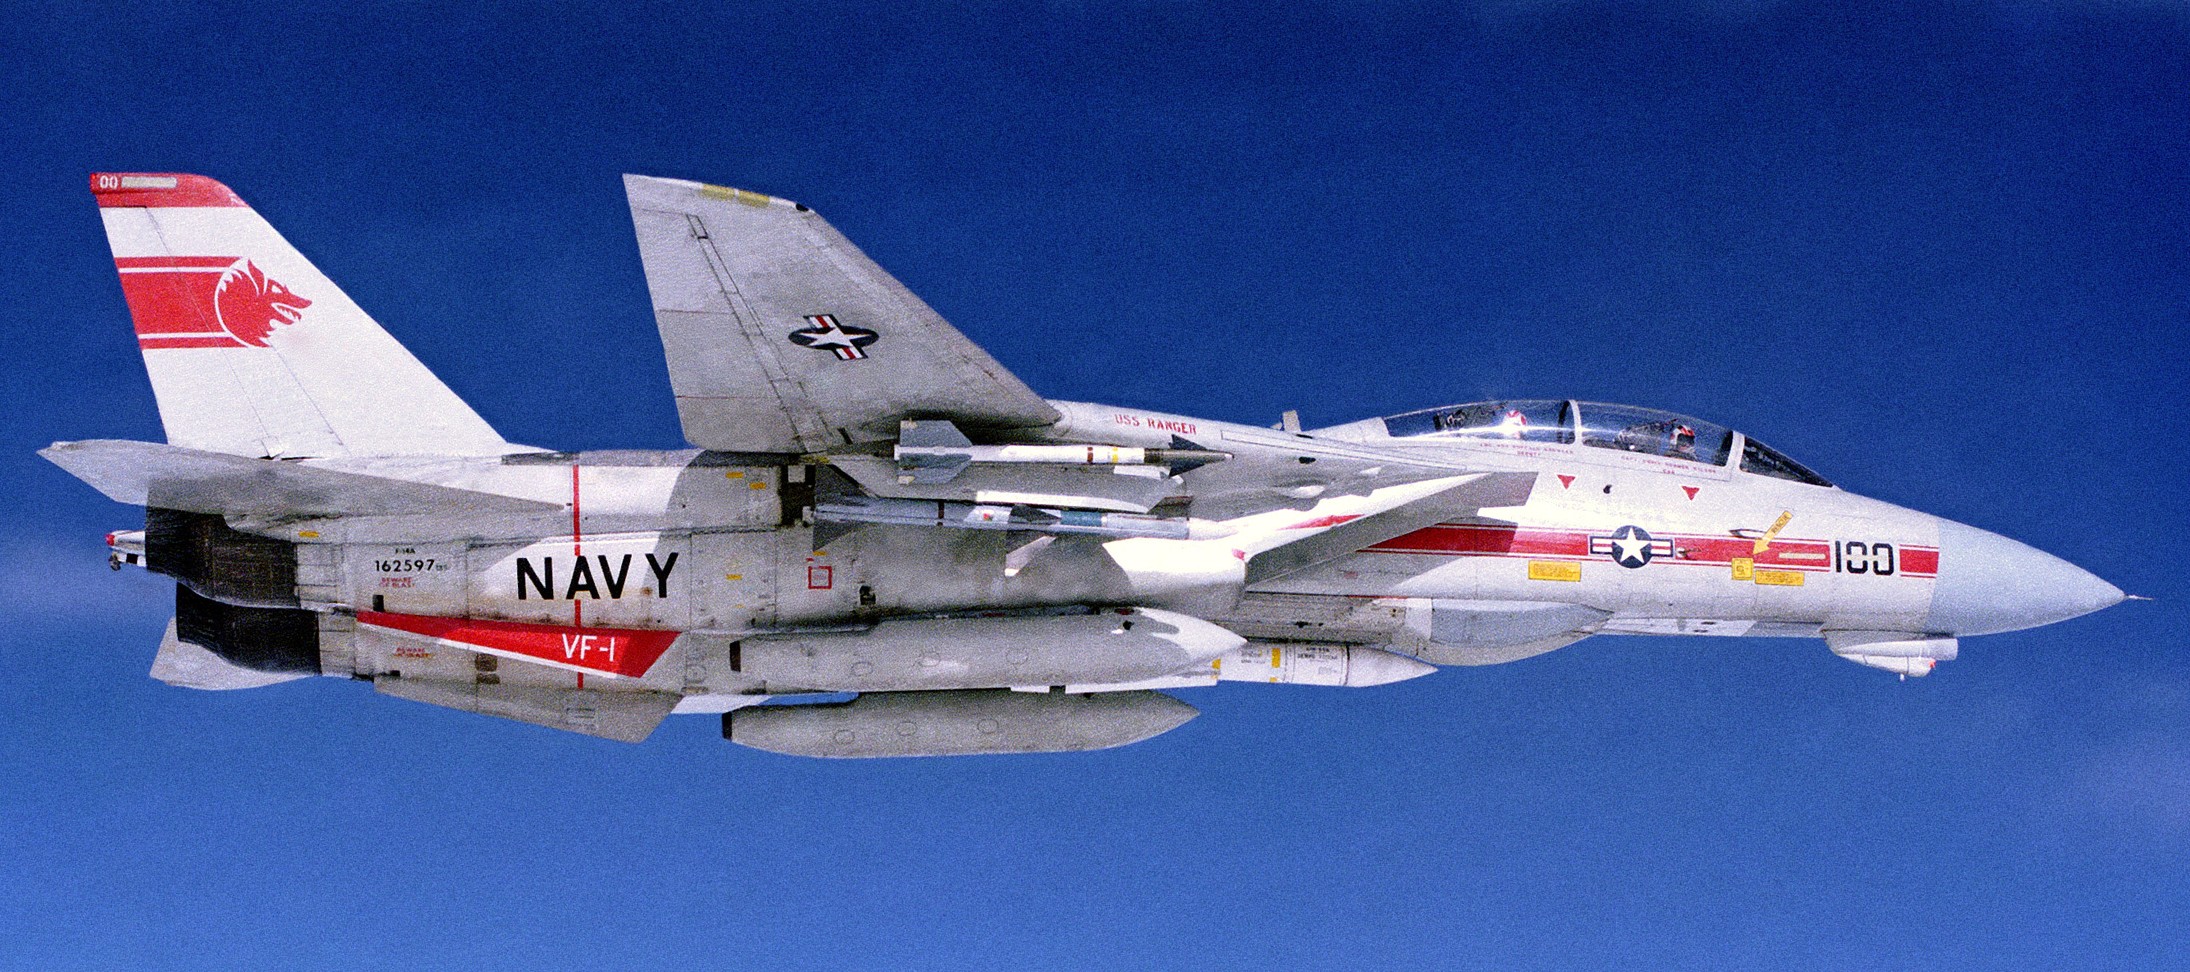 VF-1 WOLFPACK SQUADRON PATCH US NAVY GIFT 1972-1993 USS CV61 63 CVN65 F14 TOMCAT 